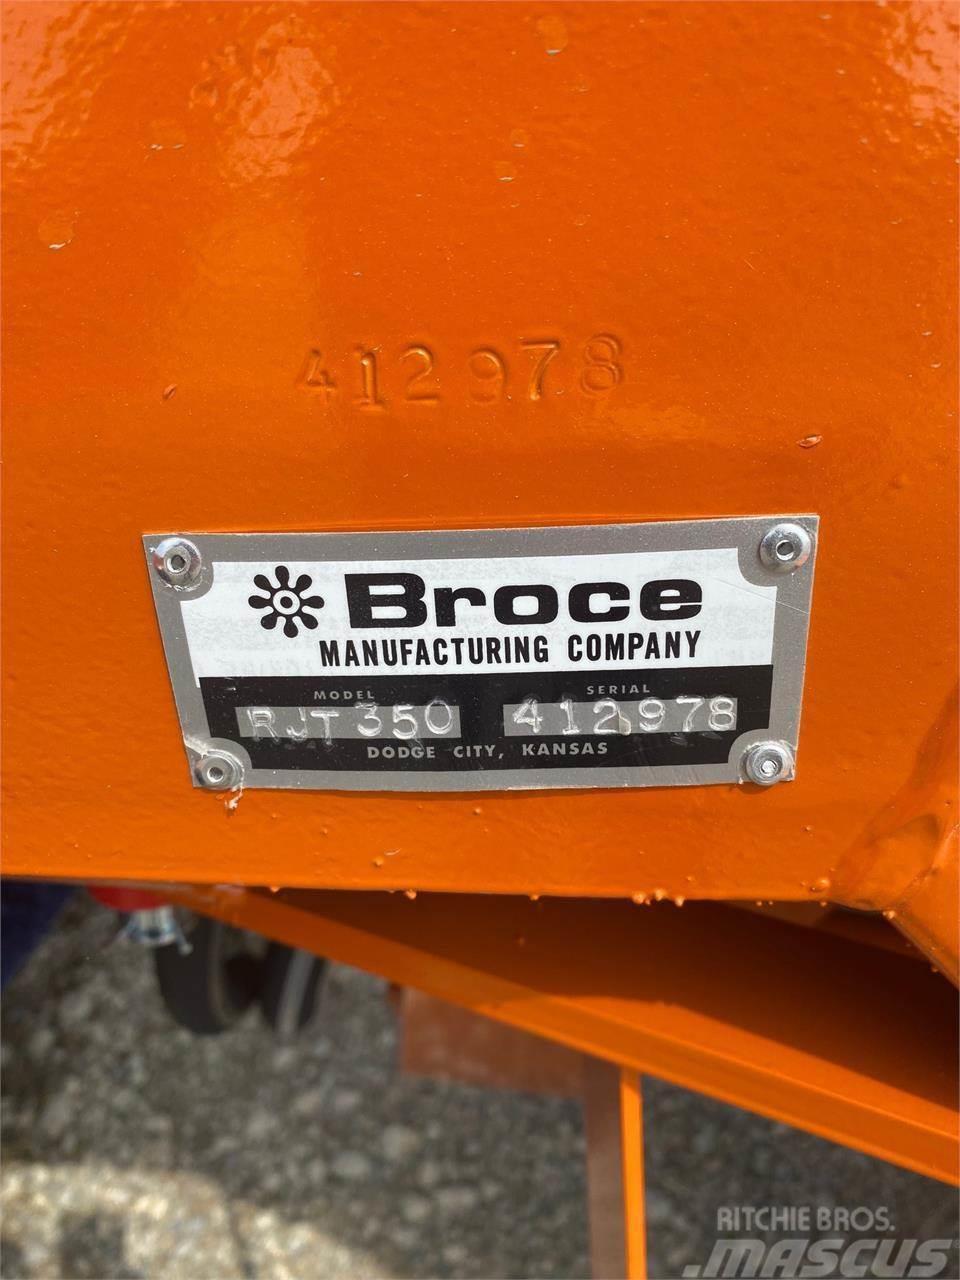 Broce RJT350 Úttakarító gépek